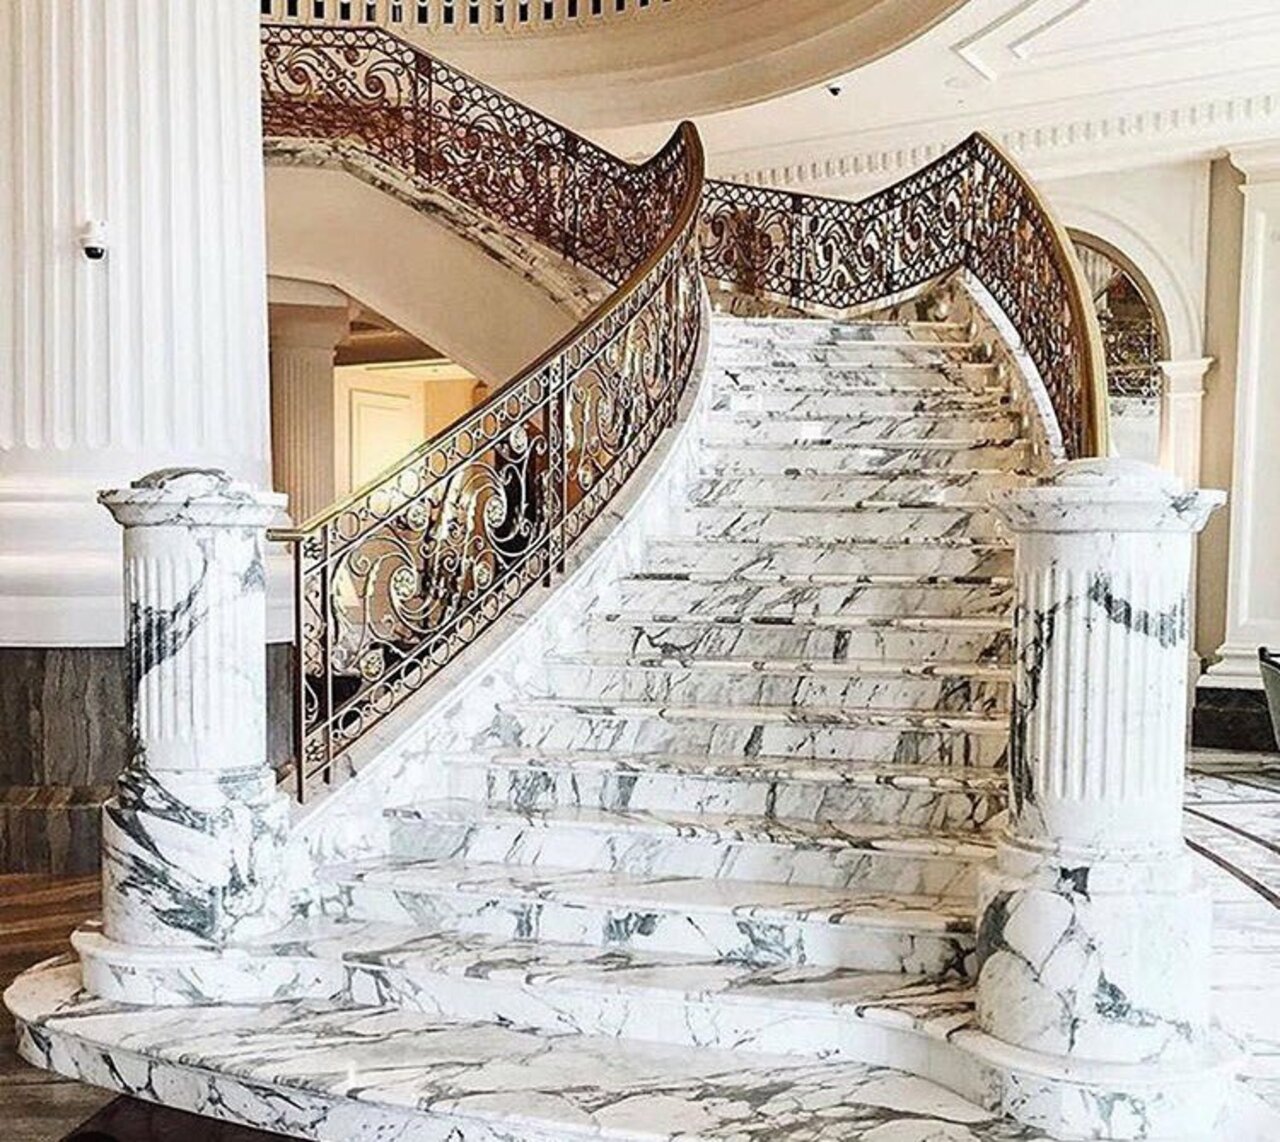 #marble #timeless #staircase #journey #elevate #inspo https://t.co/EpHfo5giOi